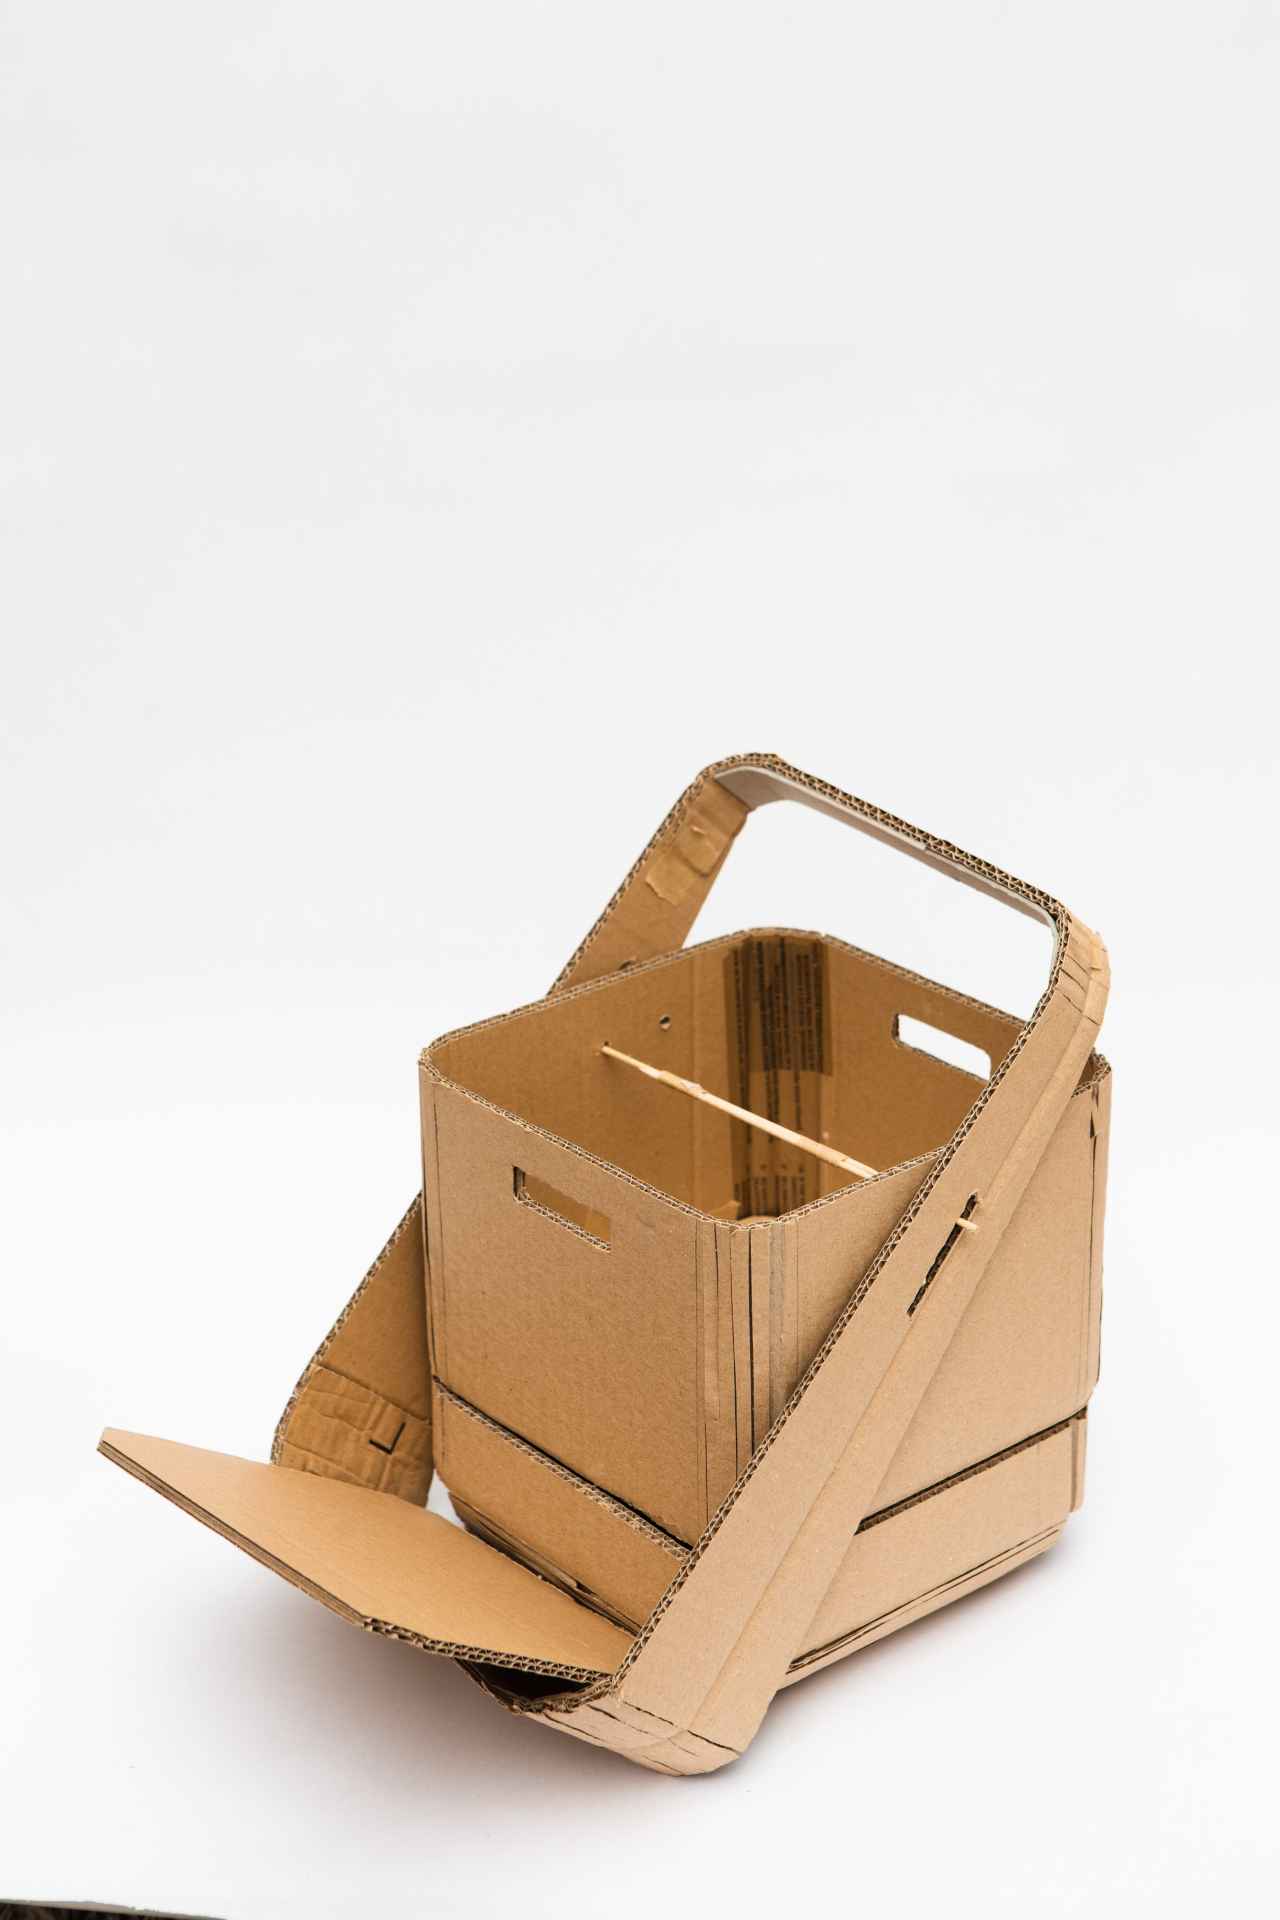 cardboard model